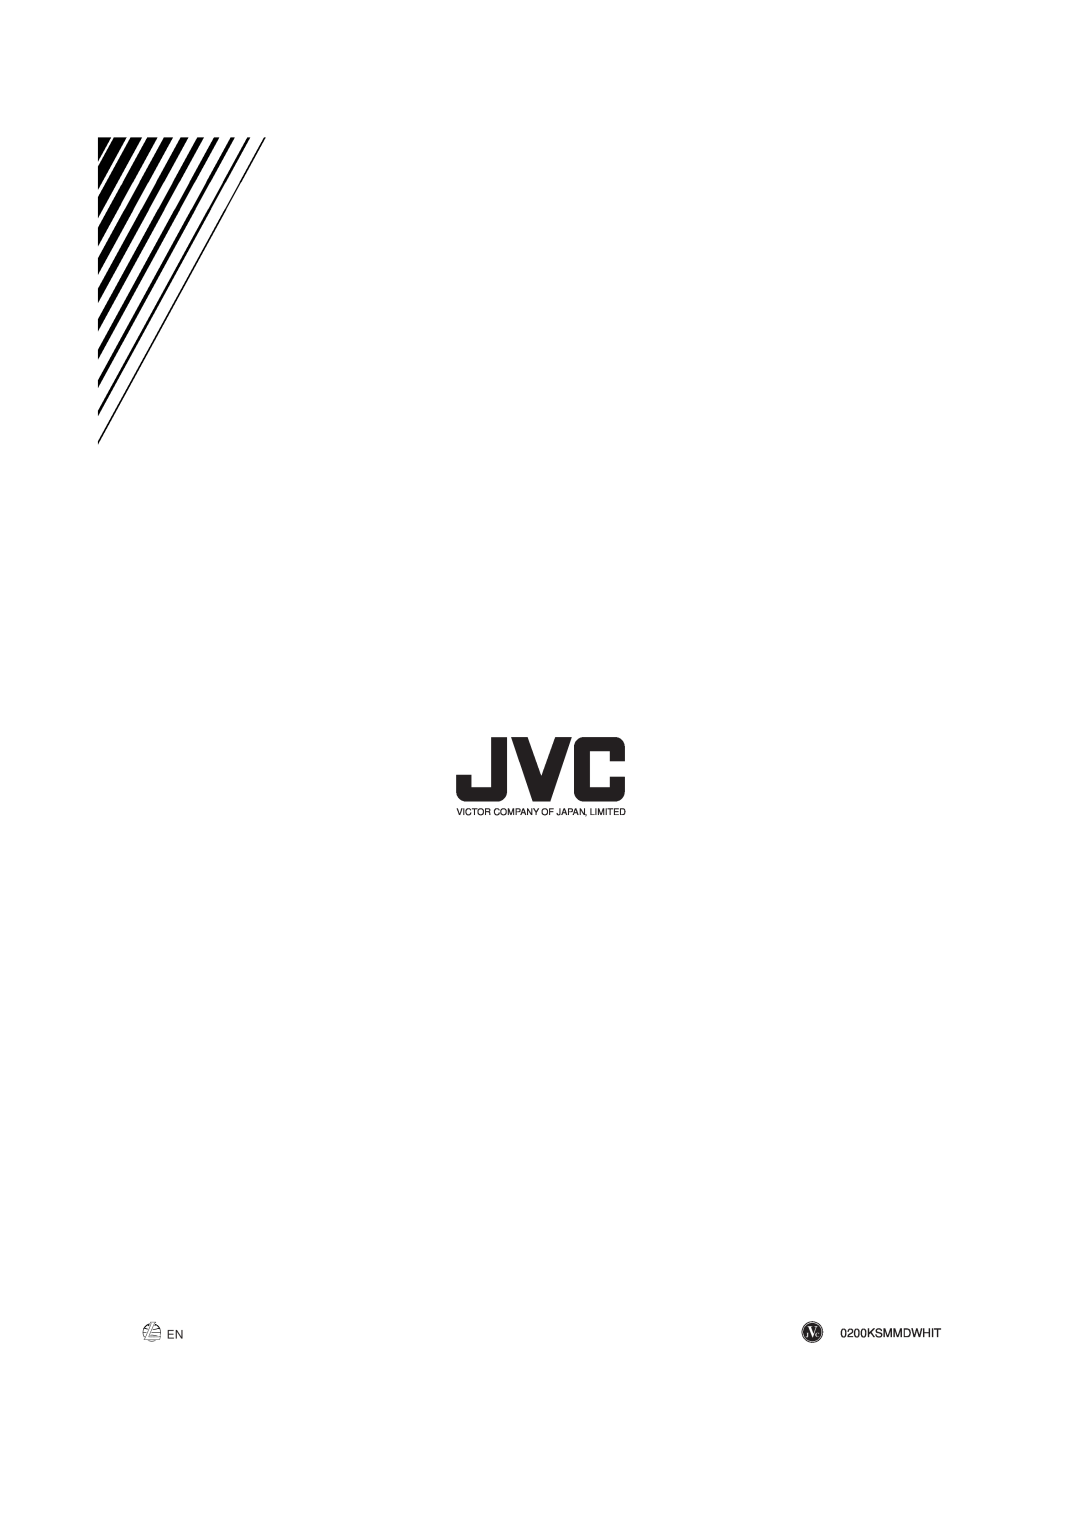 JVC MX-J300 manual 0200KSMMDWHIT, Victor Company Of Japan, Limited 